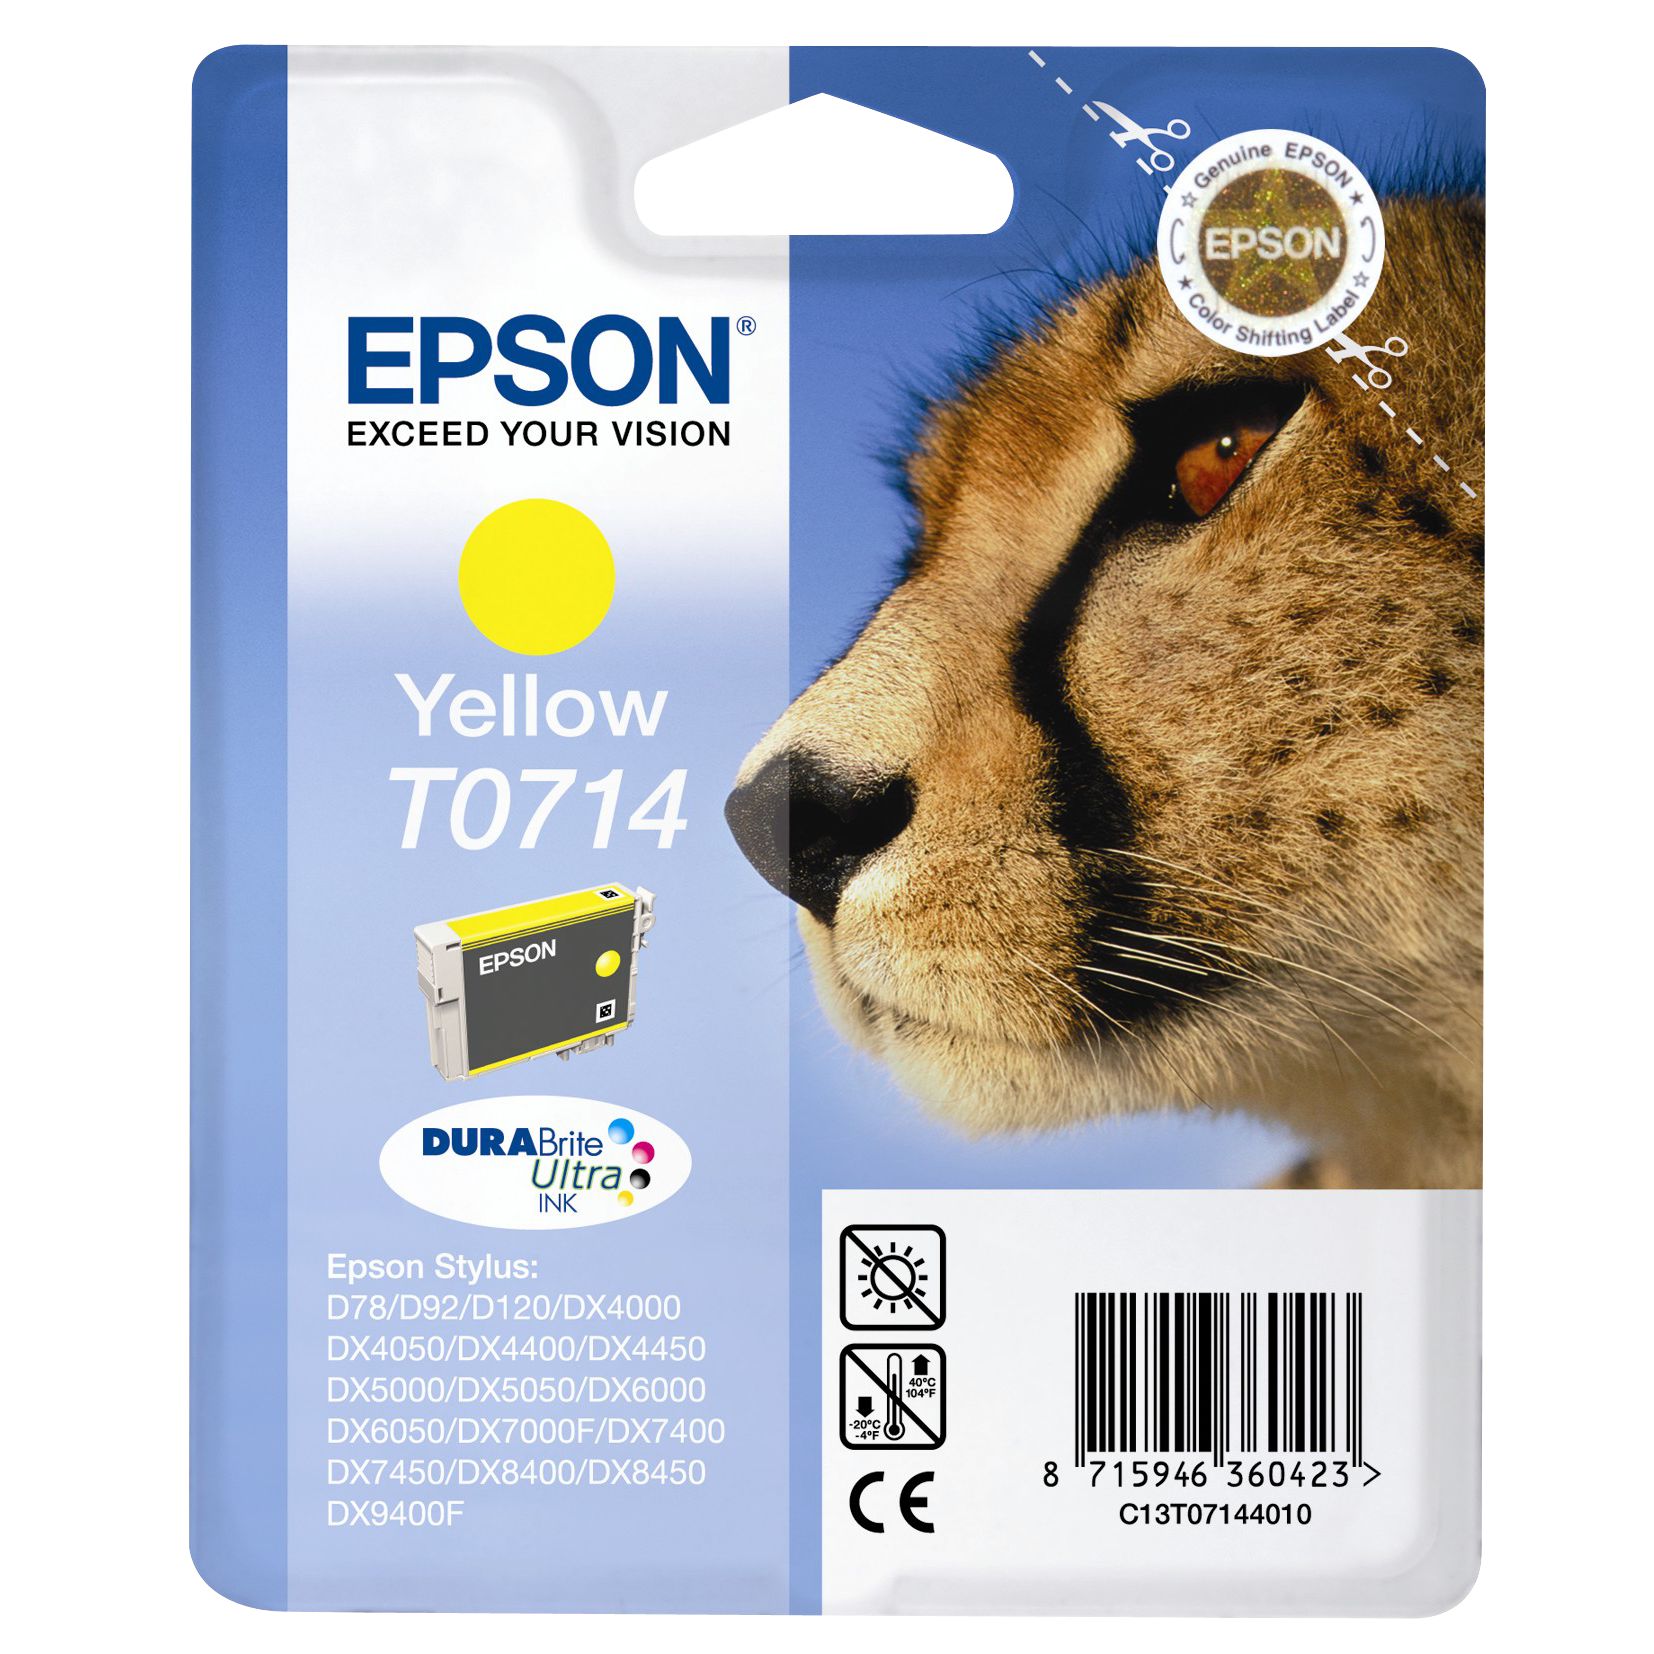 Epson Inkjet Printer Cartridge, Yellow, T0714